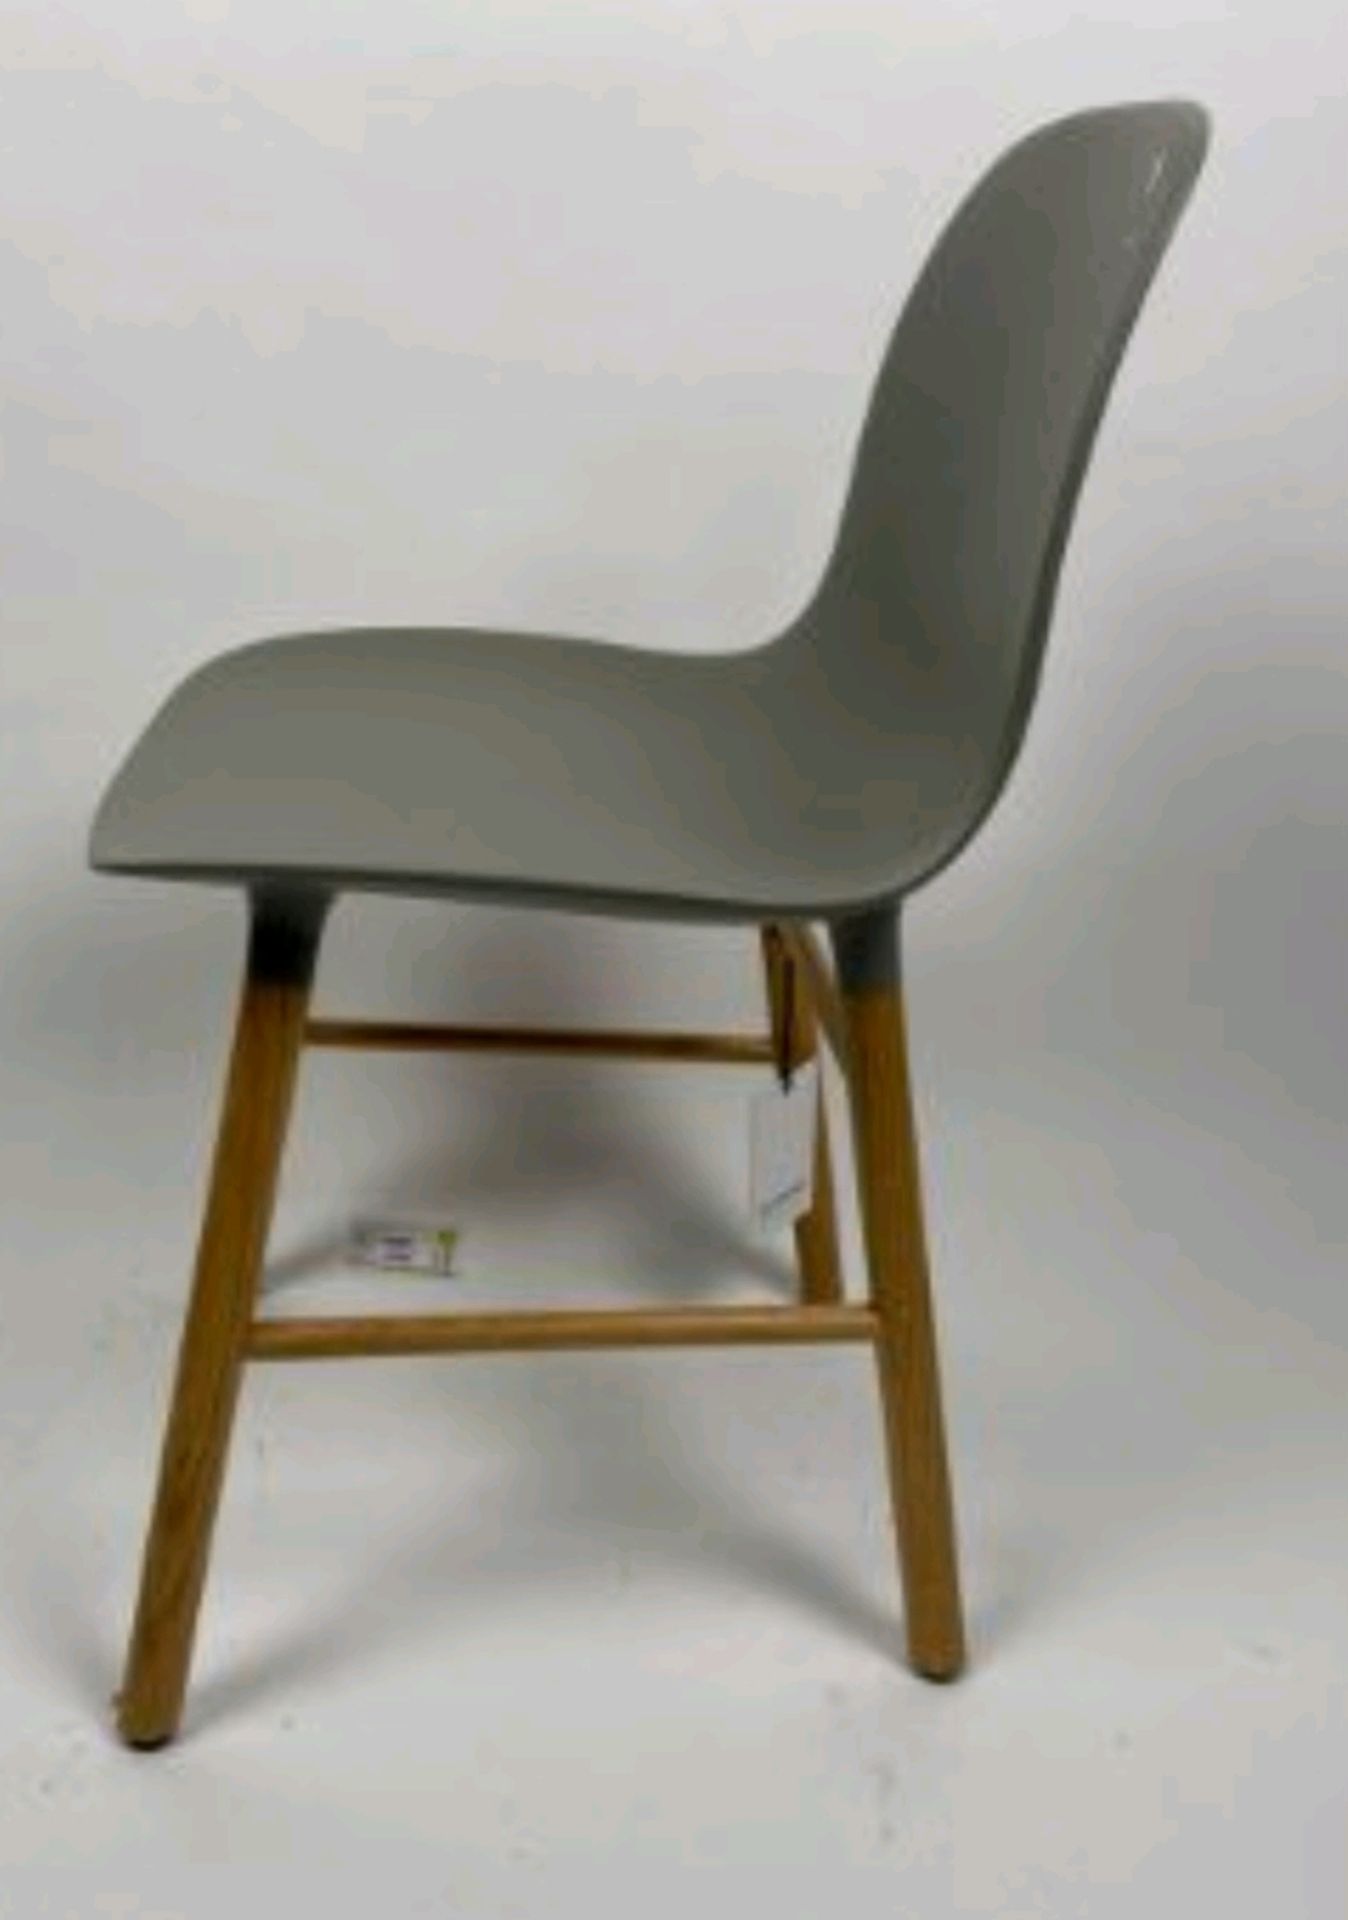 Normann Copenhagen Form Chair - Image 2 of 3